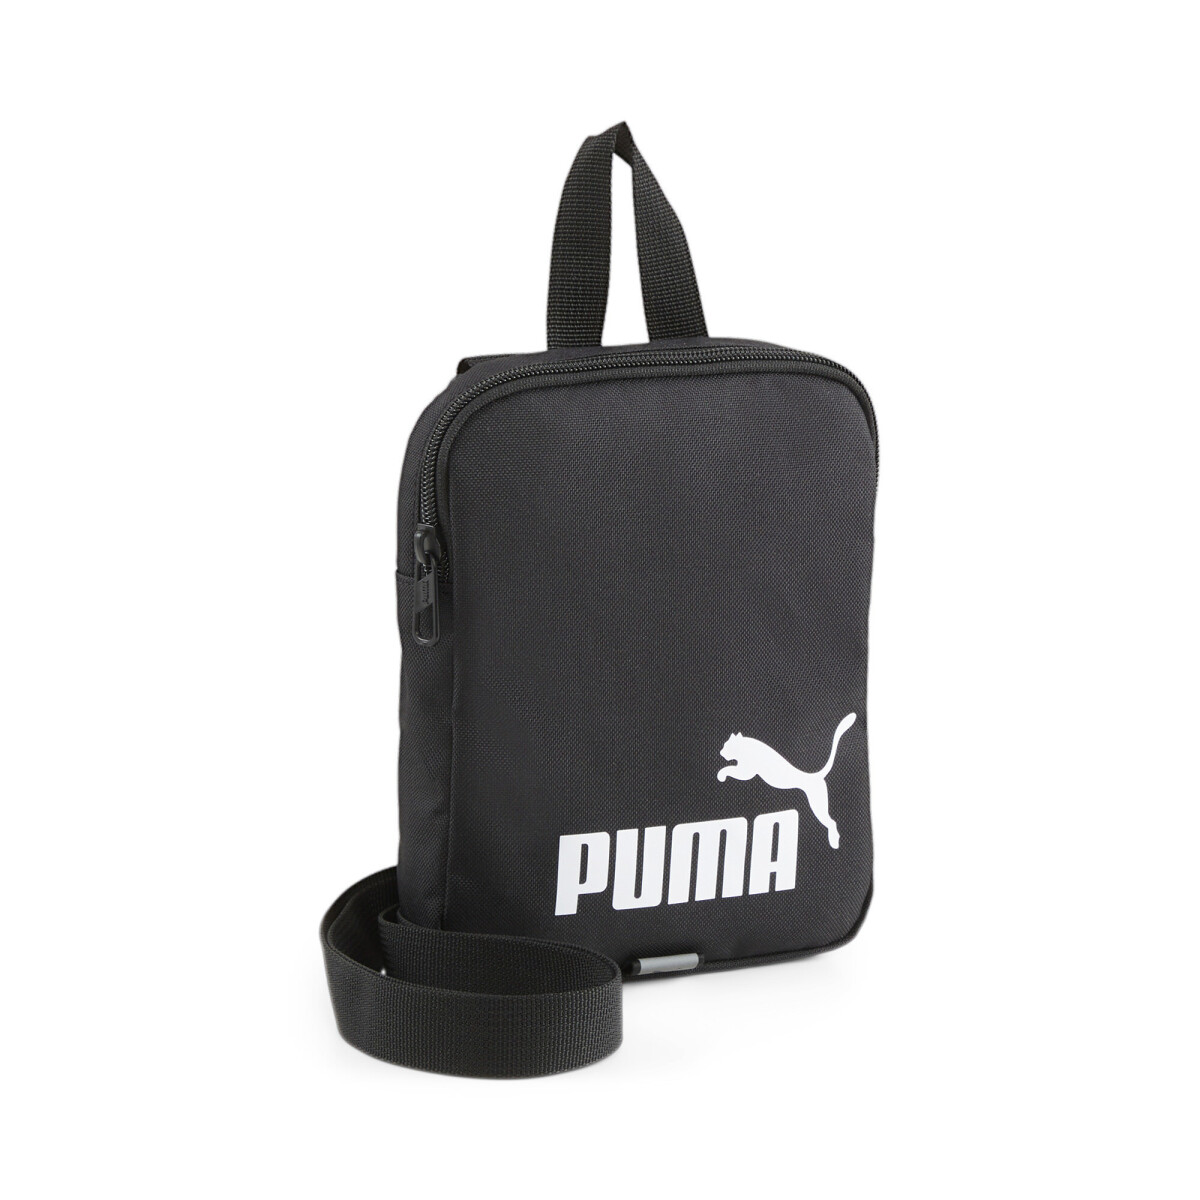 Bandolera Portable Puma - Negro/Blanco 